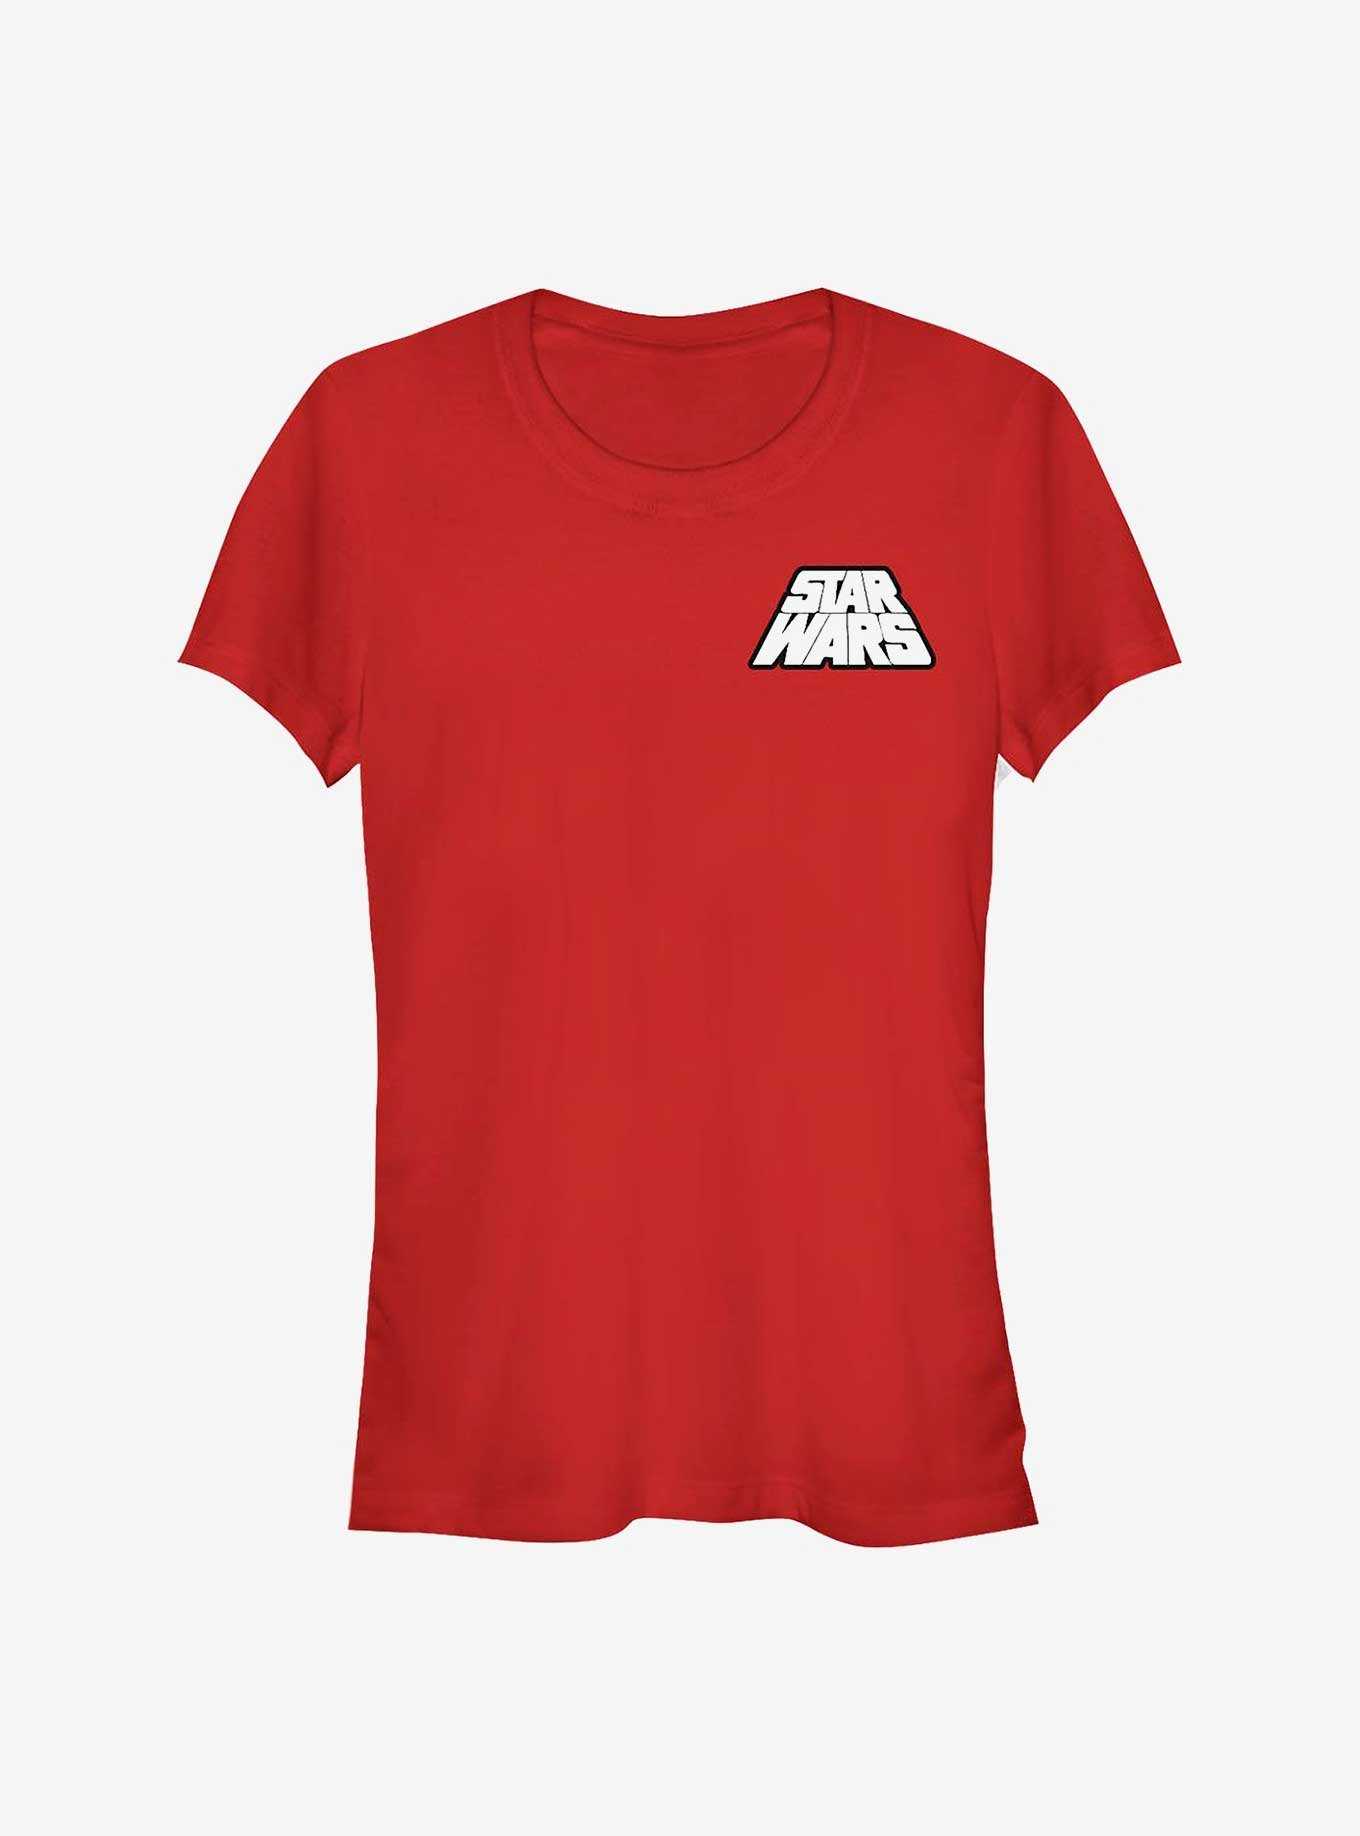 Star Wars Distressed Slant Logo Girls T-Shirt, , hi-res